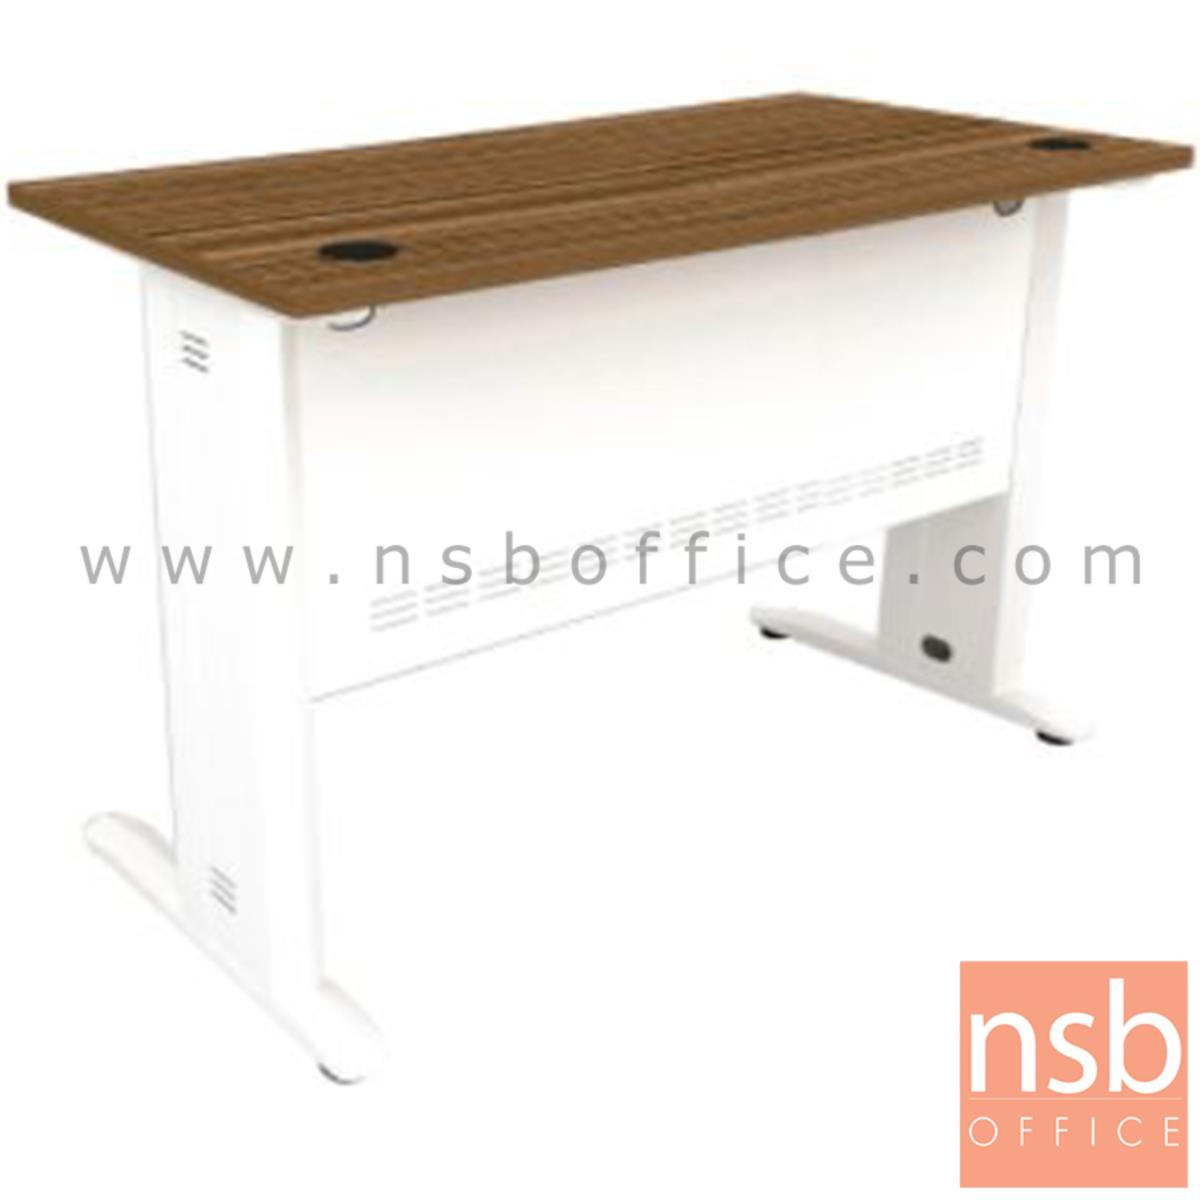 A34A006:โต๊ะทำงาน รุ่น Rosie (โรซี่) ขนาด 120W ,160W cm.  สีซีบราโน่-ขาว